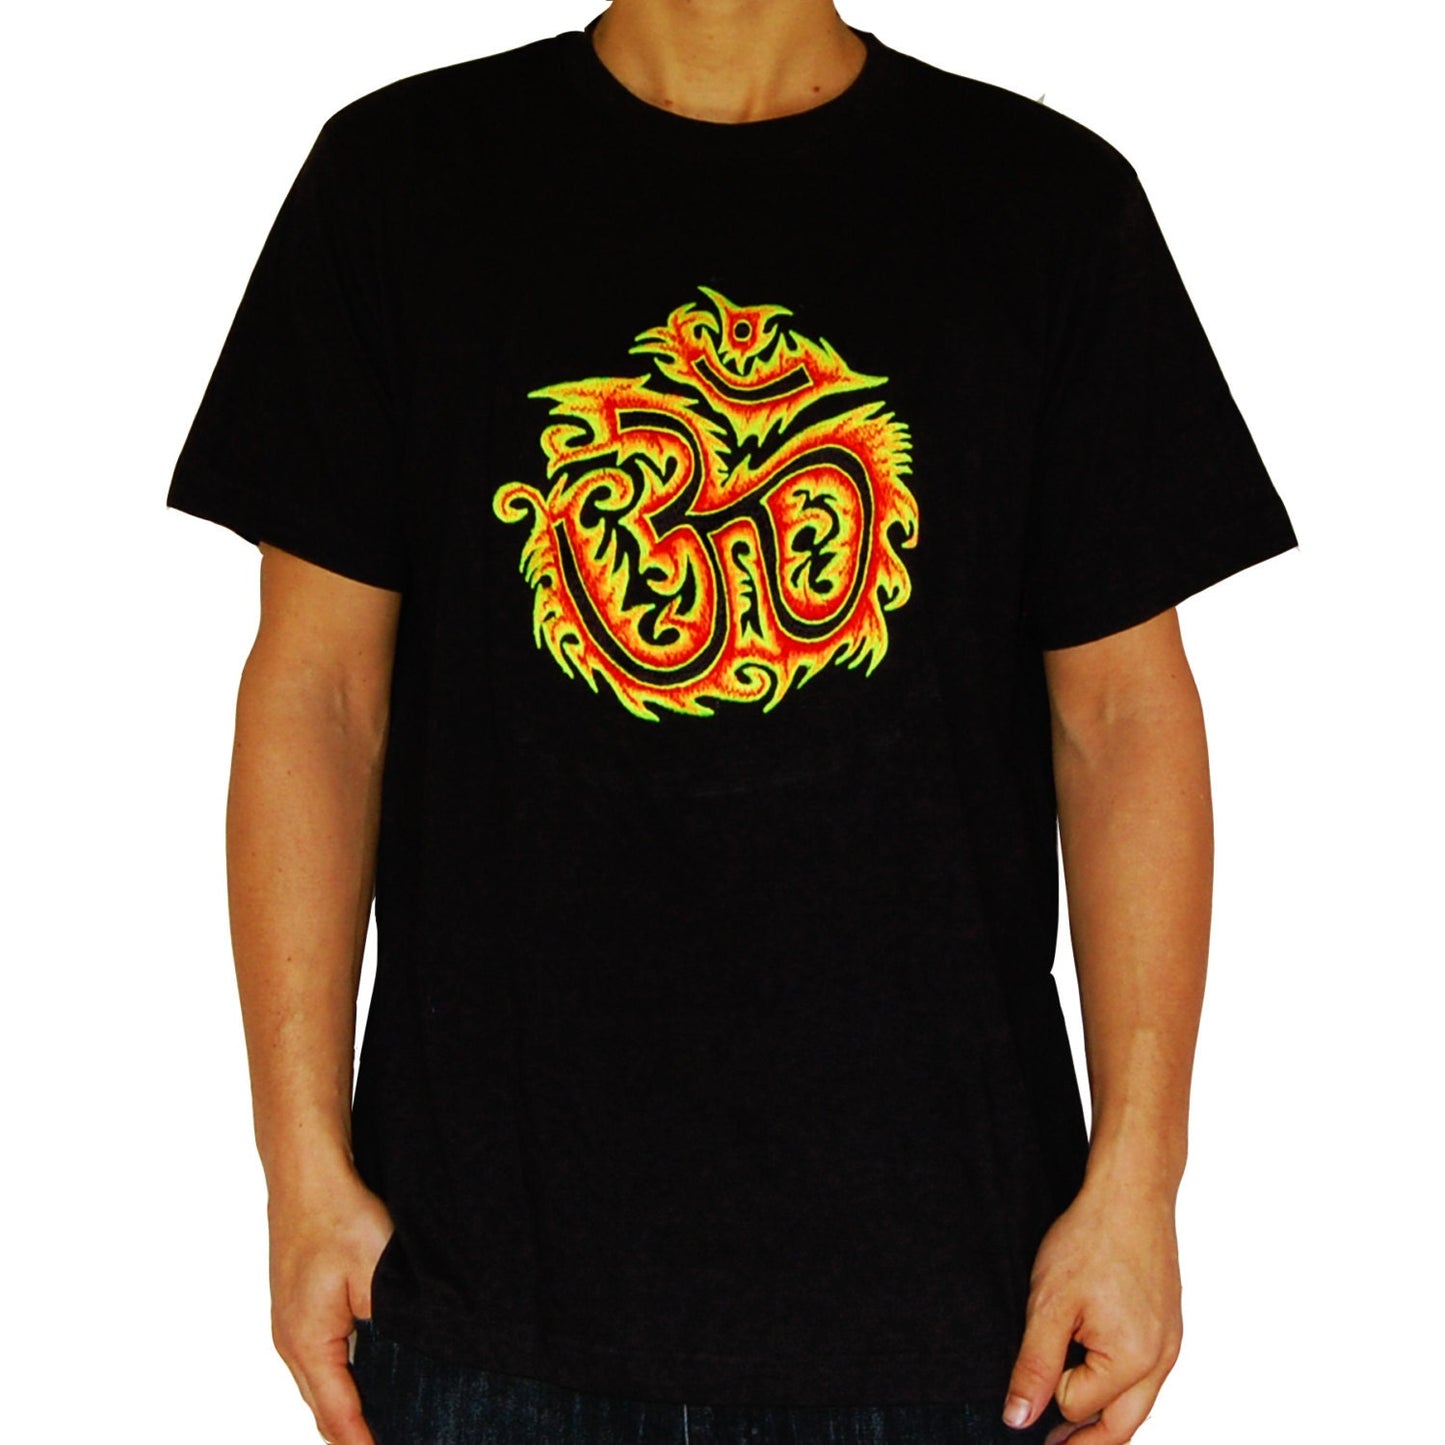 AUM fire T-Shirt blacklight handmade embroidery no print OM yantra goa t-shirt